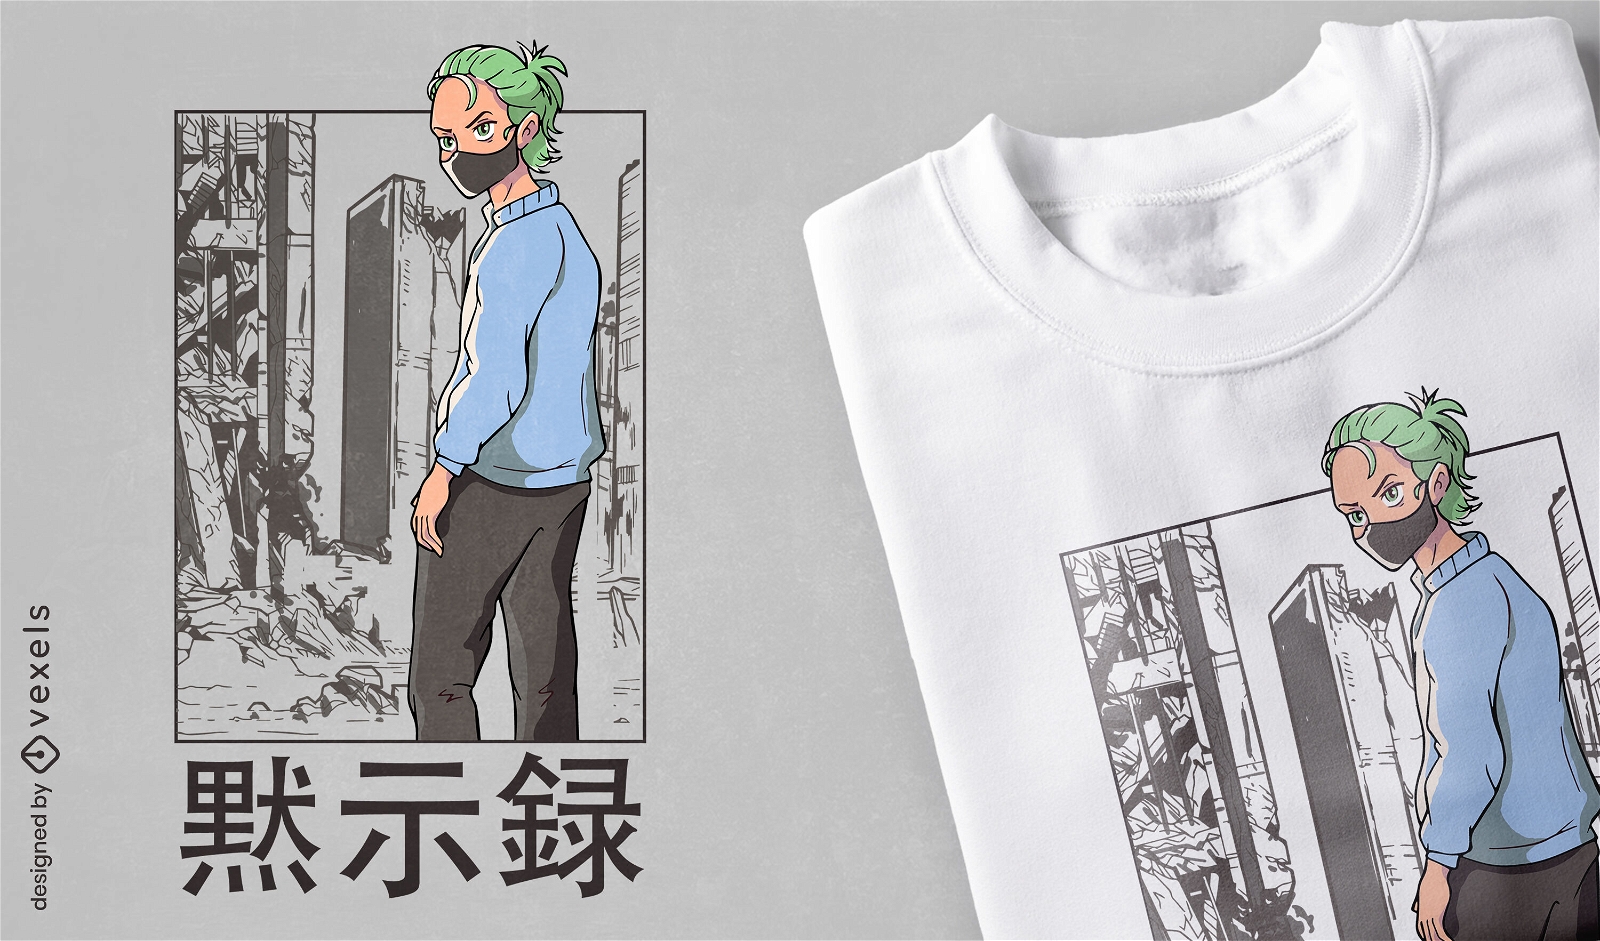 Sumi Rent-a-girlfriend Anime Cartoon Character Mens Black Graphic Tee Shirt-medium  : Target